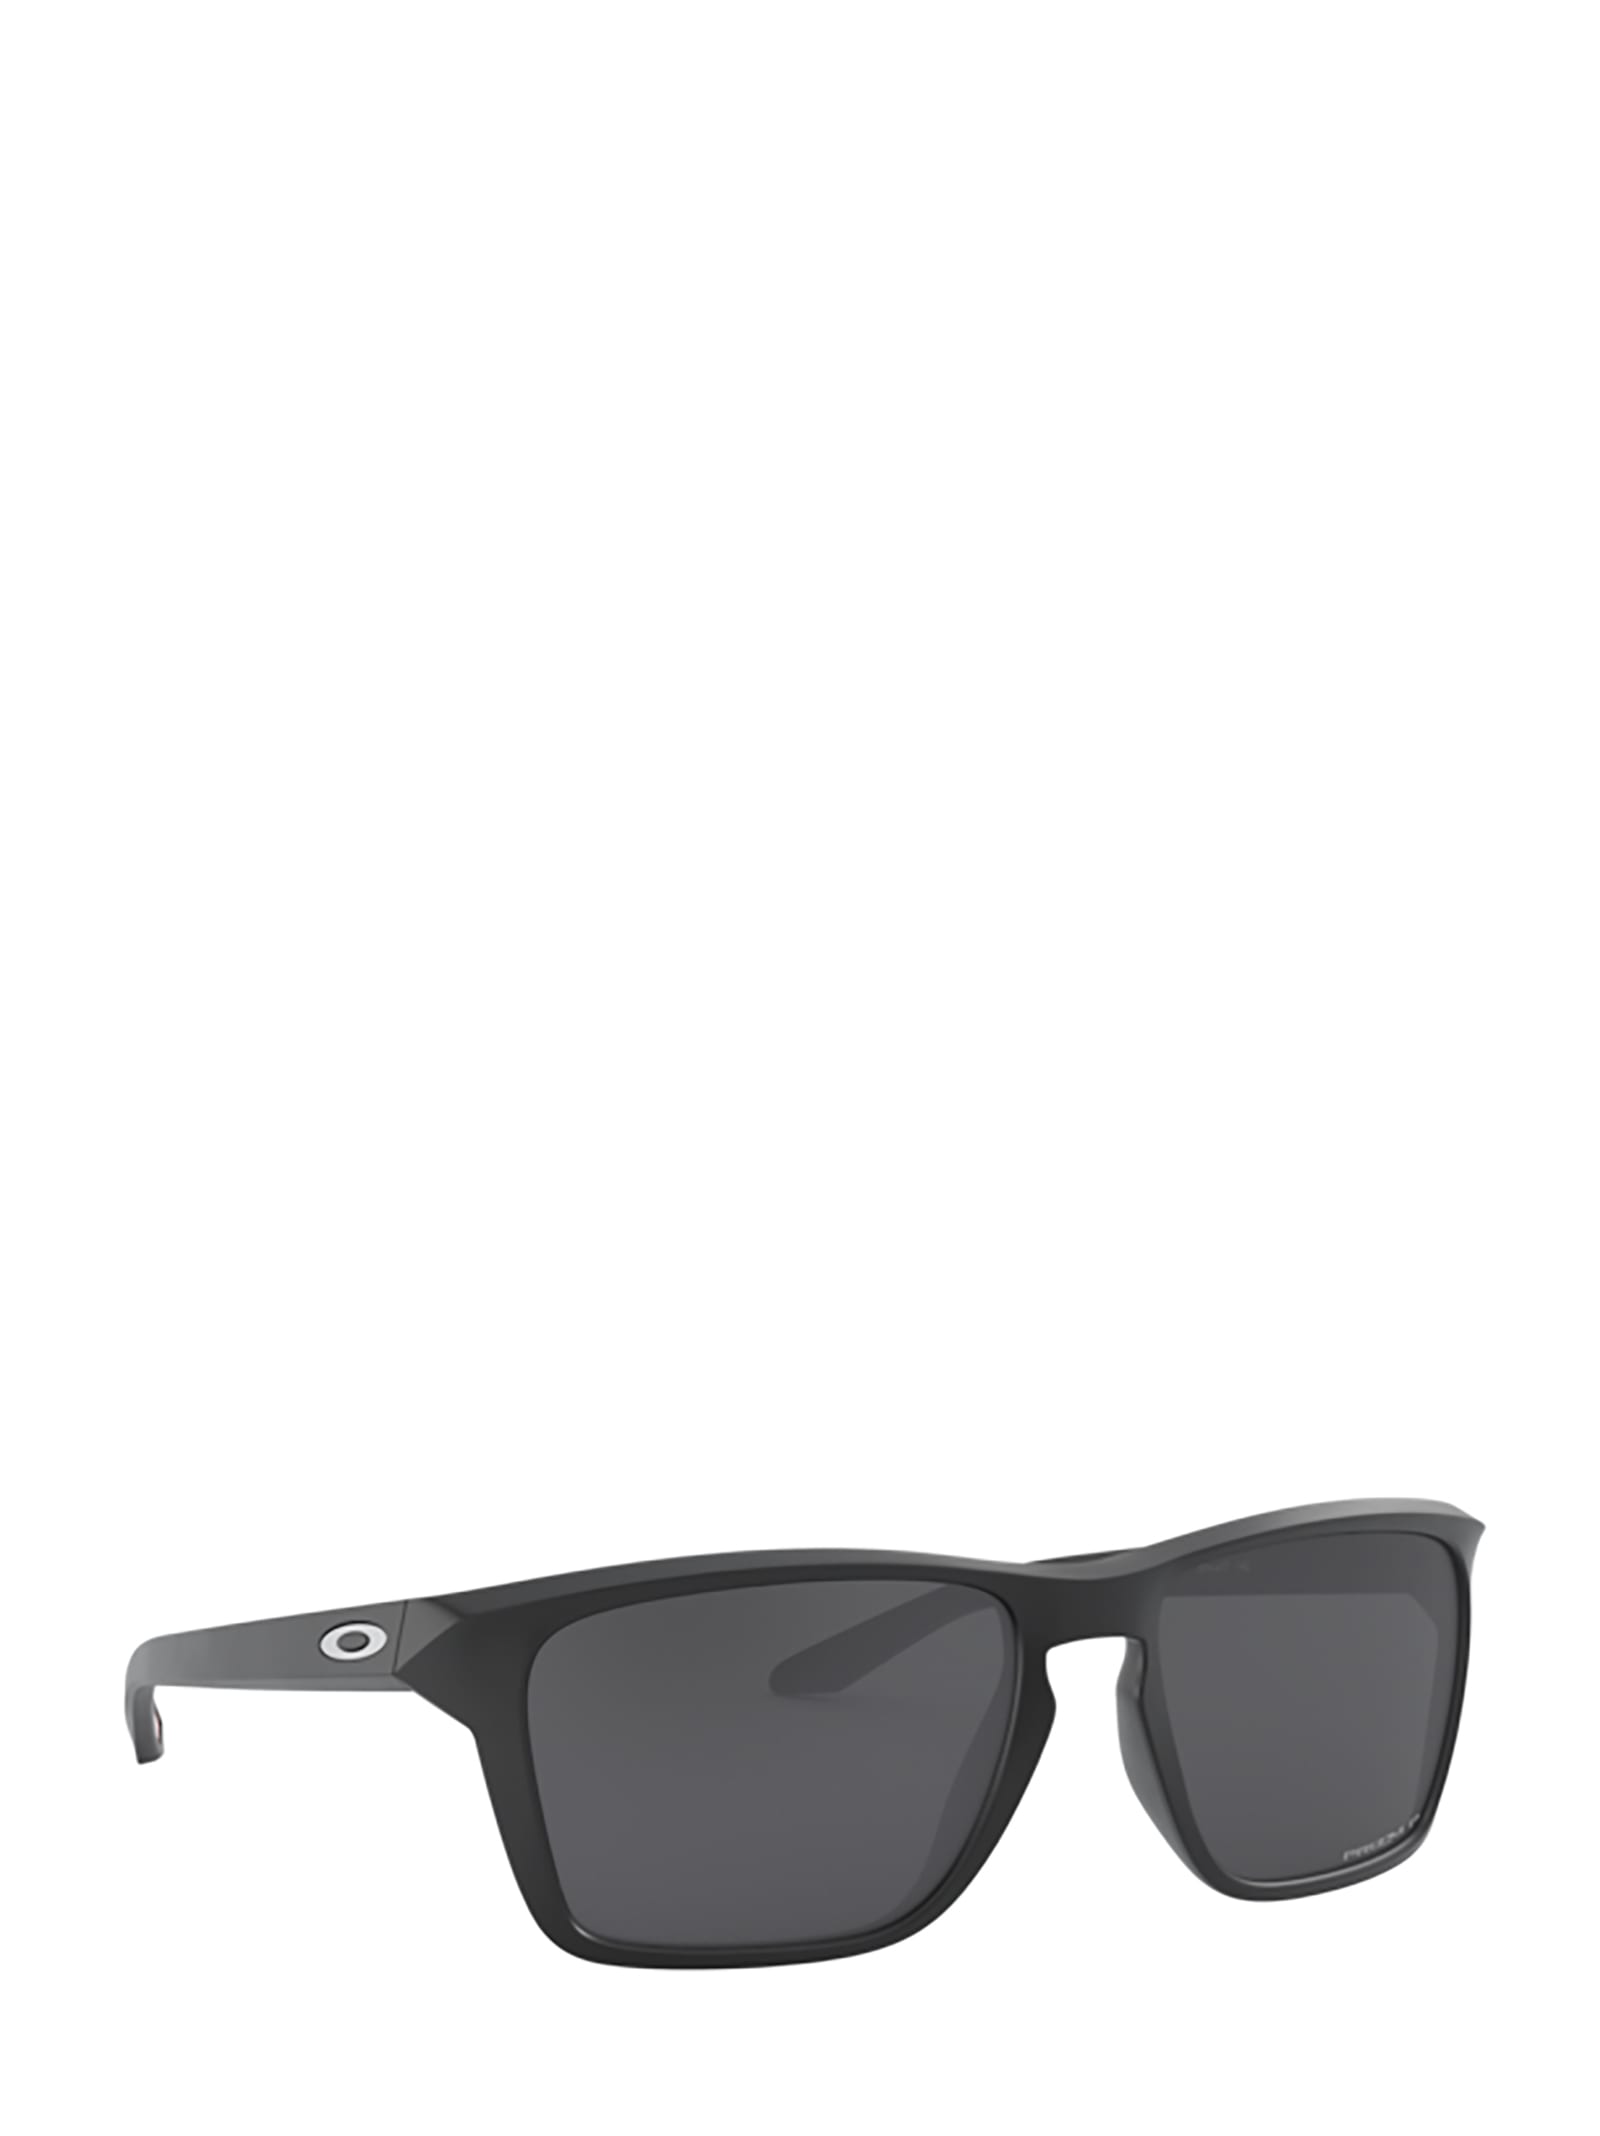 Shop Oakley Oo9448 Matte Black Sunglasses